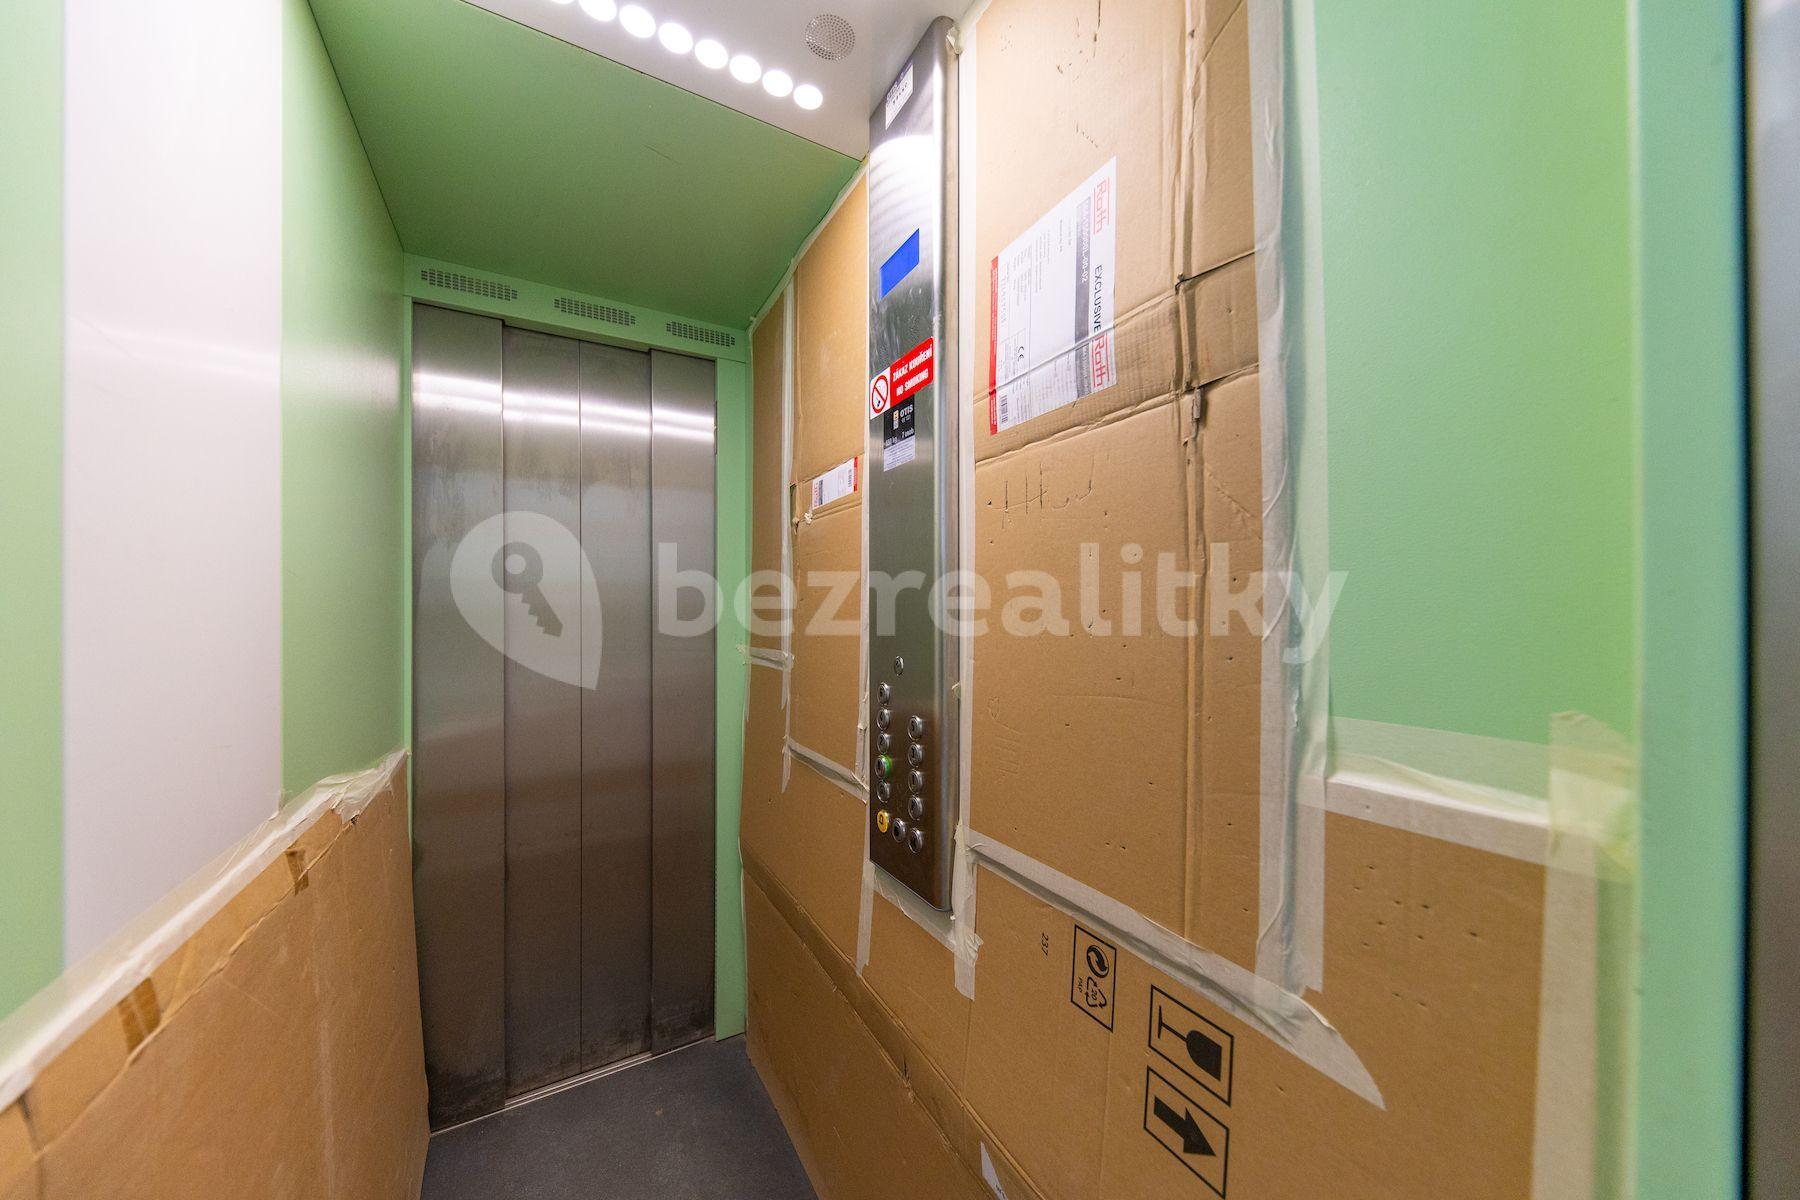 2 bedroom flat for sale, 57 m², Hlinky, Brno, Jihomoravský Region